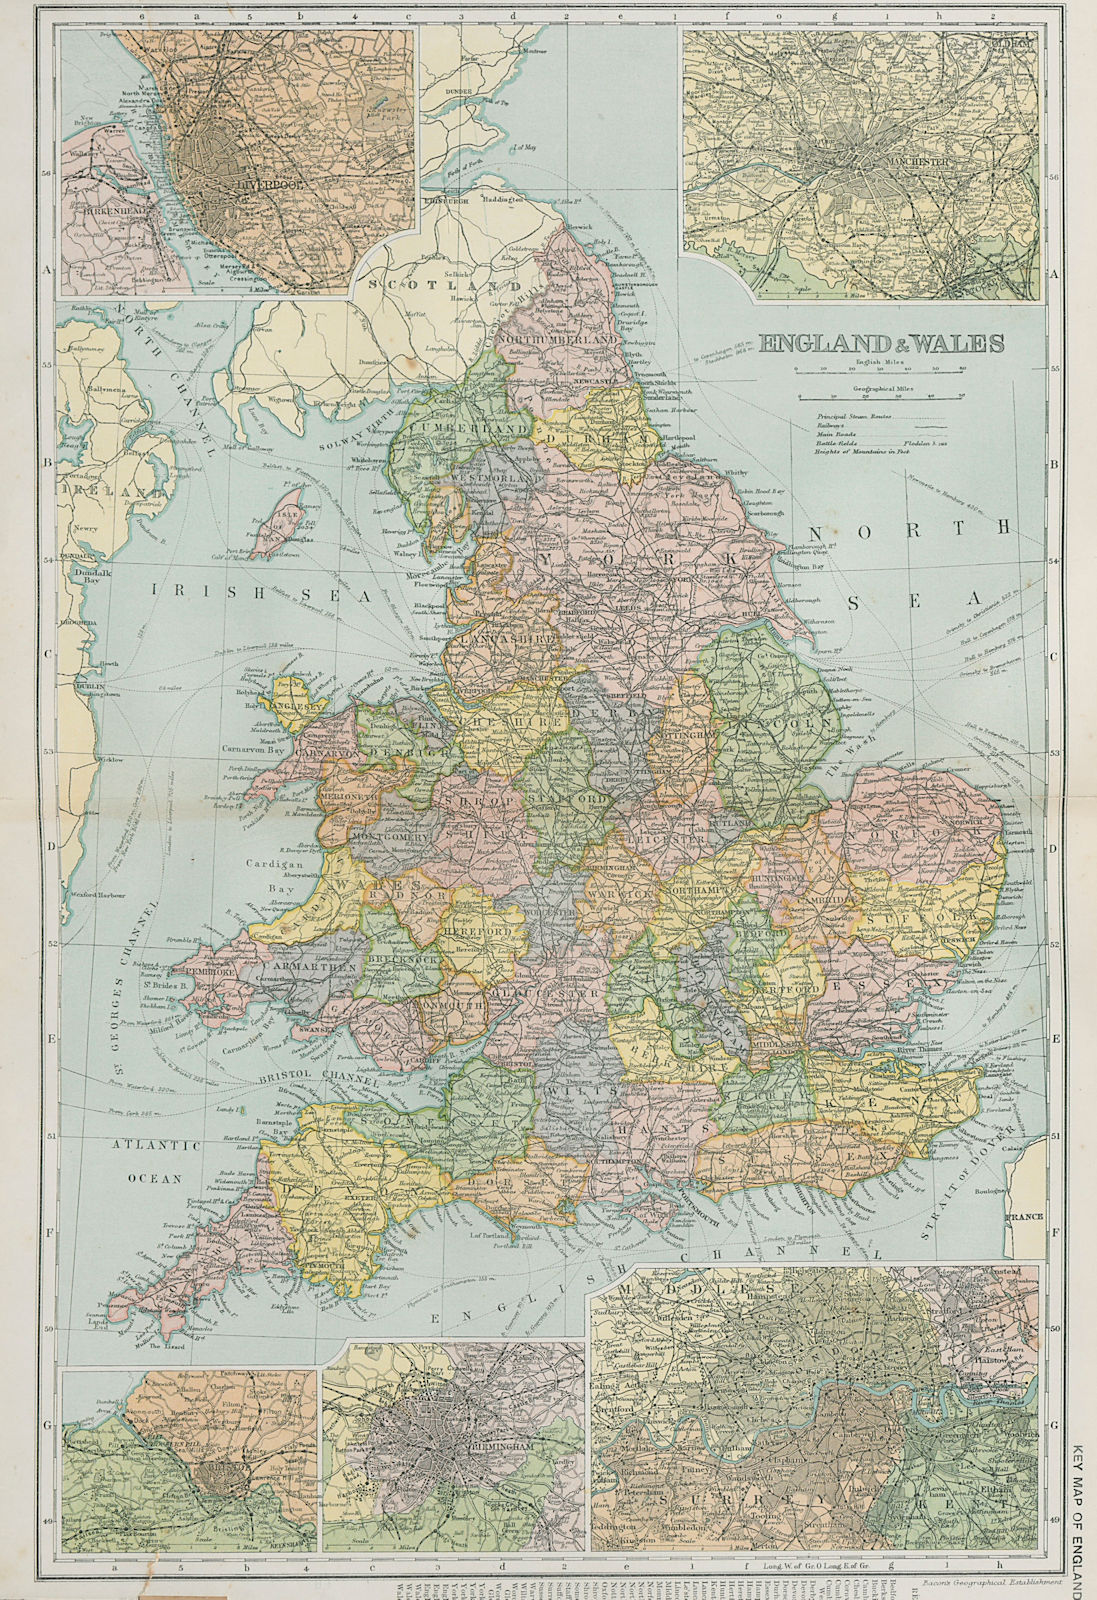 Associate Product ENGLAND & WALES. Liverpool Manchester Bristol Birmingham London. BACON 1900 map